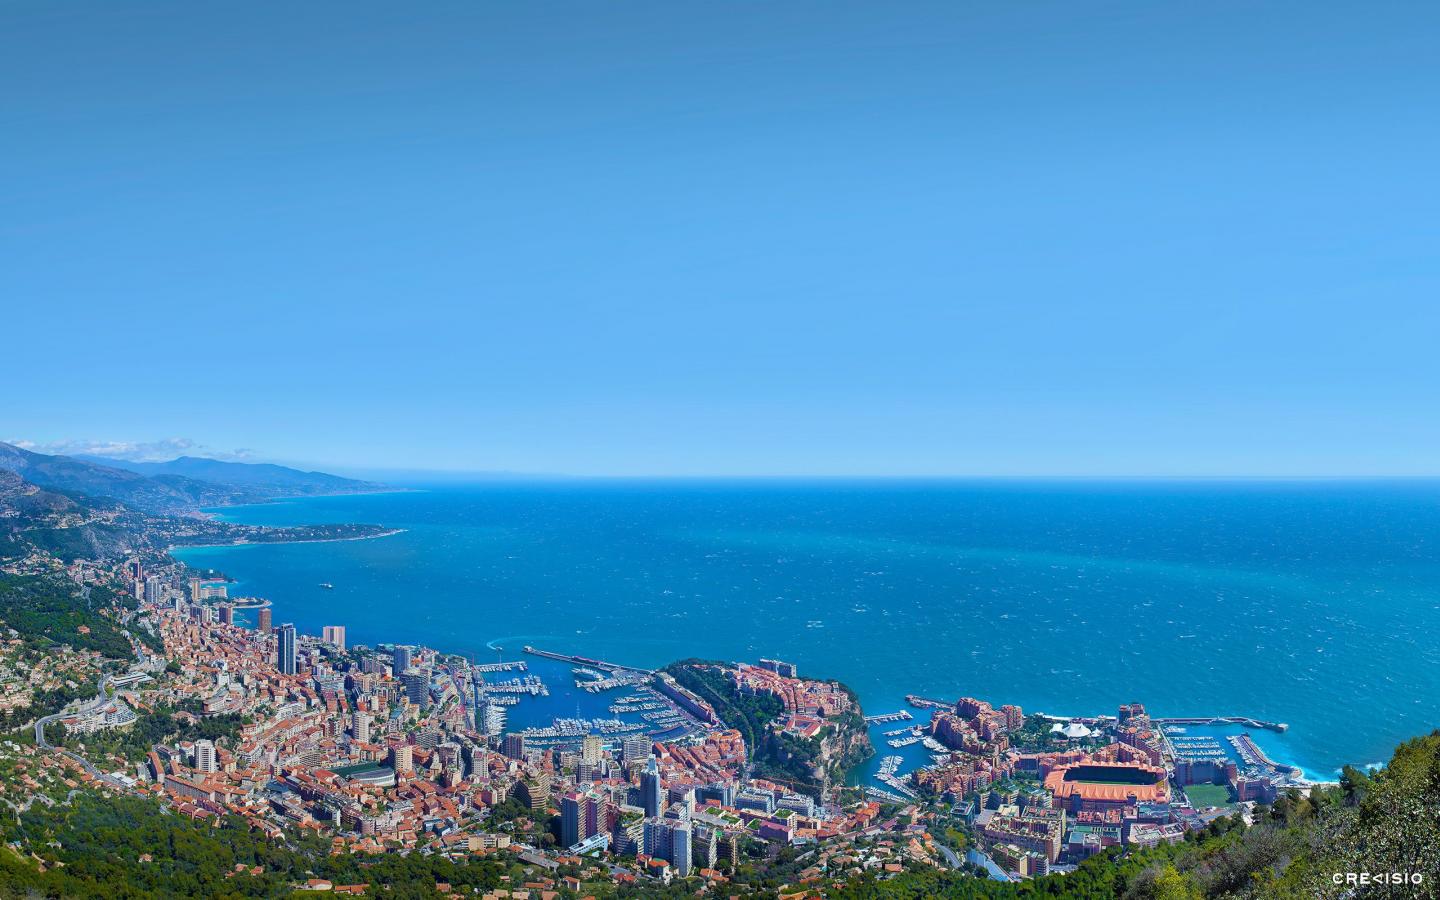 Monaco Panorama by Crevisio